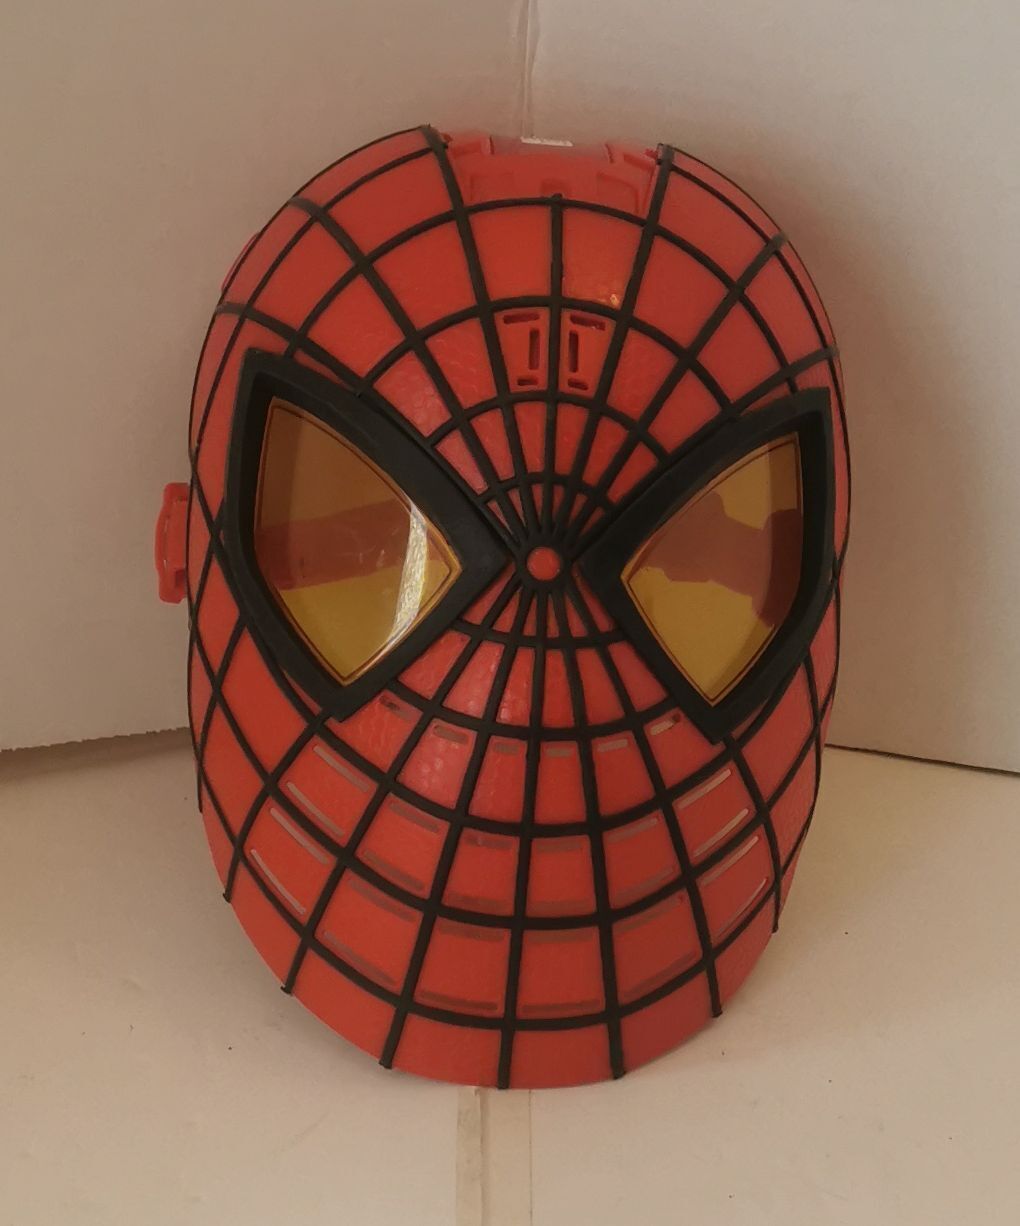 Masque de Spider-Man